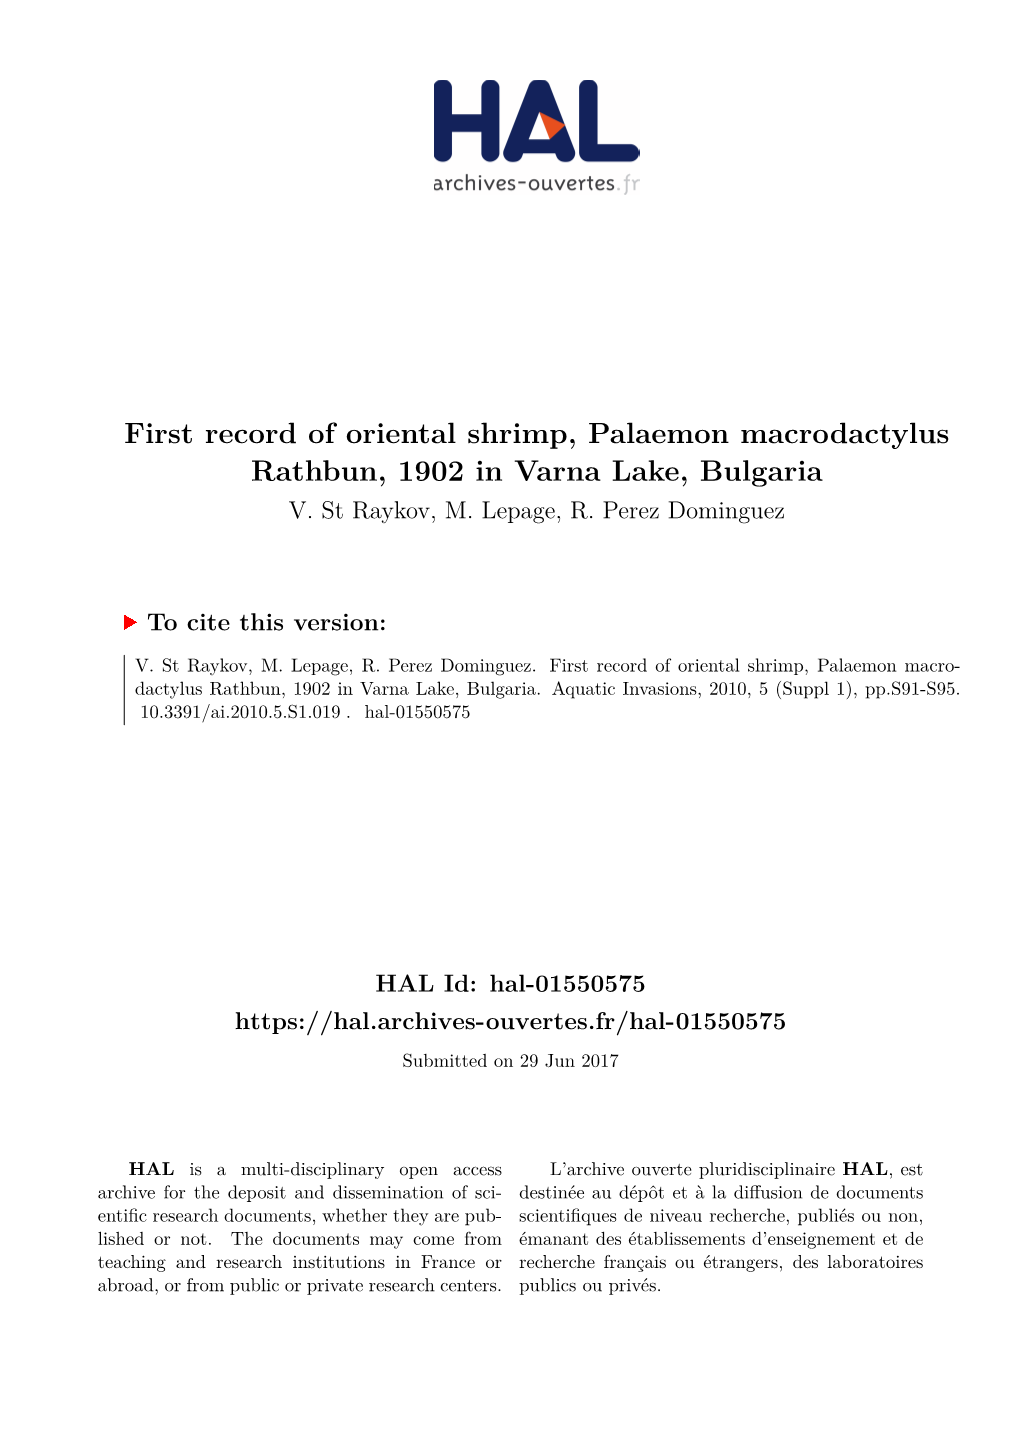 First Record of Oriental Shrimp, Palaemon Macrodactylus Rathbun, 1902 in Varna Lake, Bulgaria V